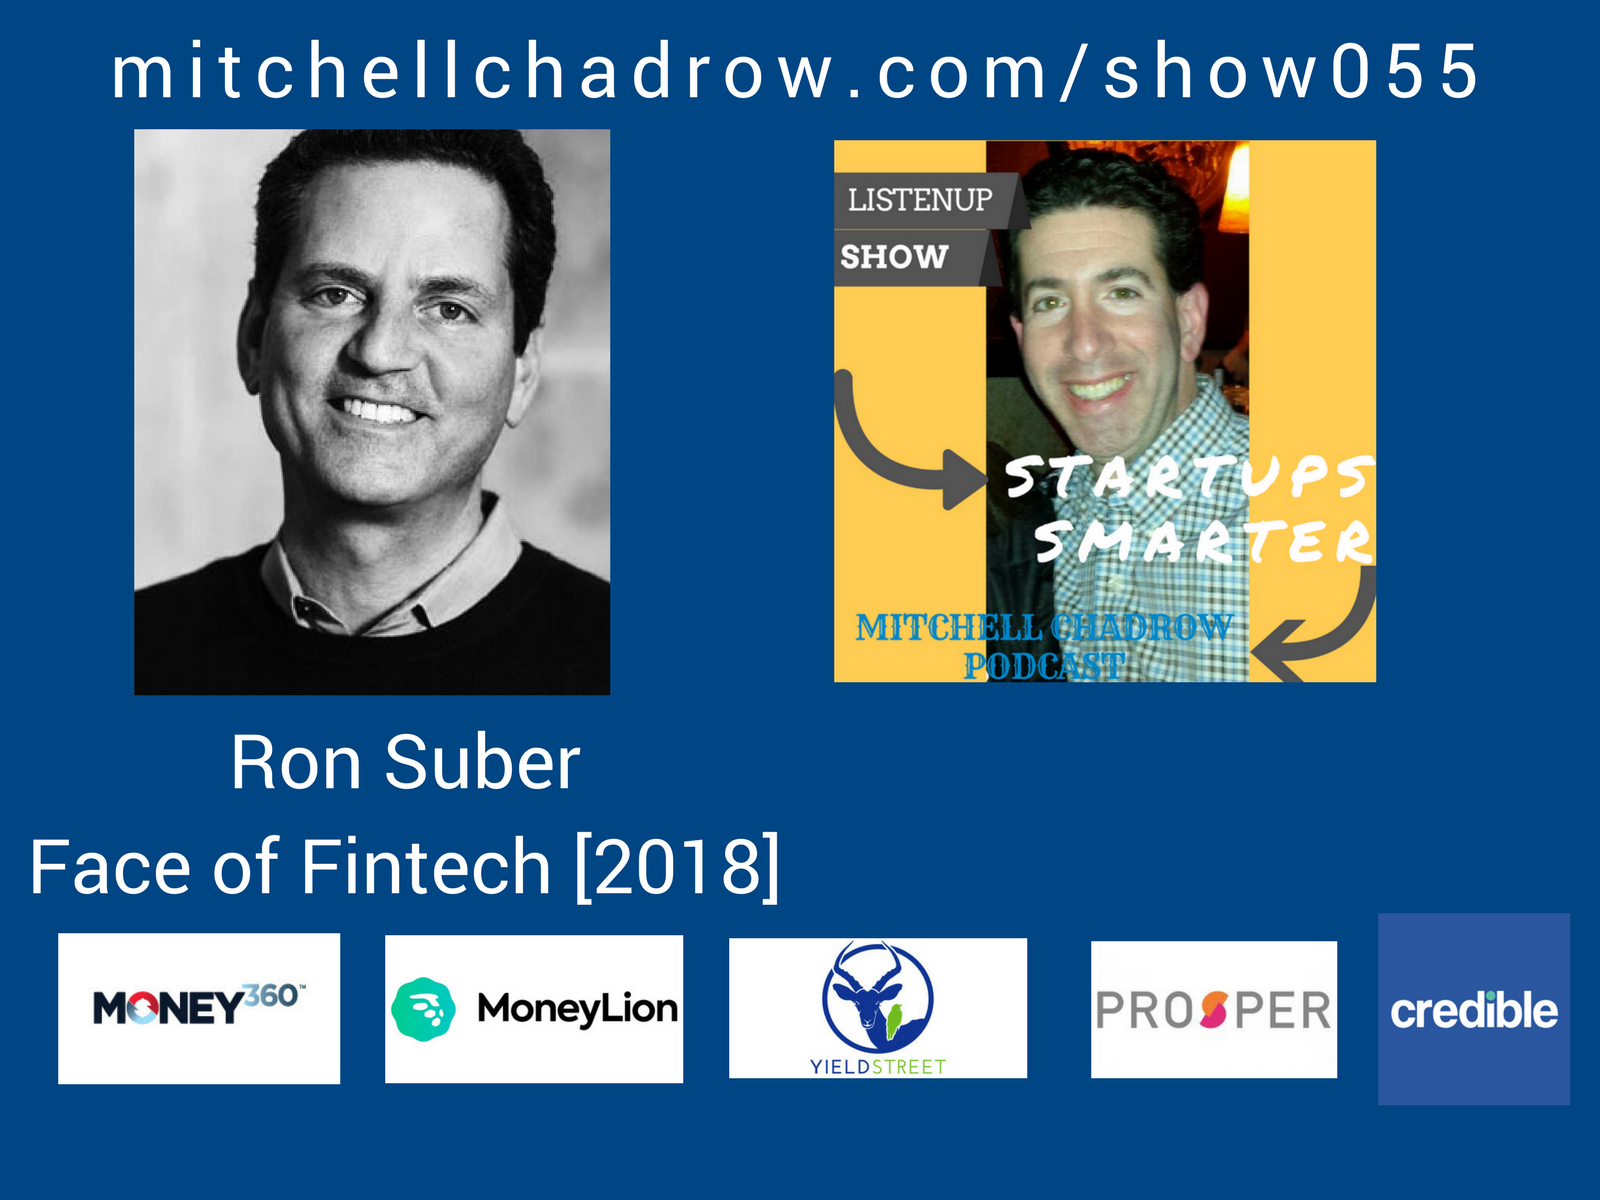 Ron-Suber-Face-of-Fintech-Prosper-MoneyLion-Credible-YieldStreet-Money360-Listen-Up-Show-Mitchell-Chadrow-Podcast-2018